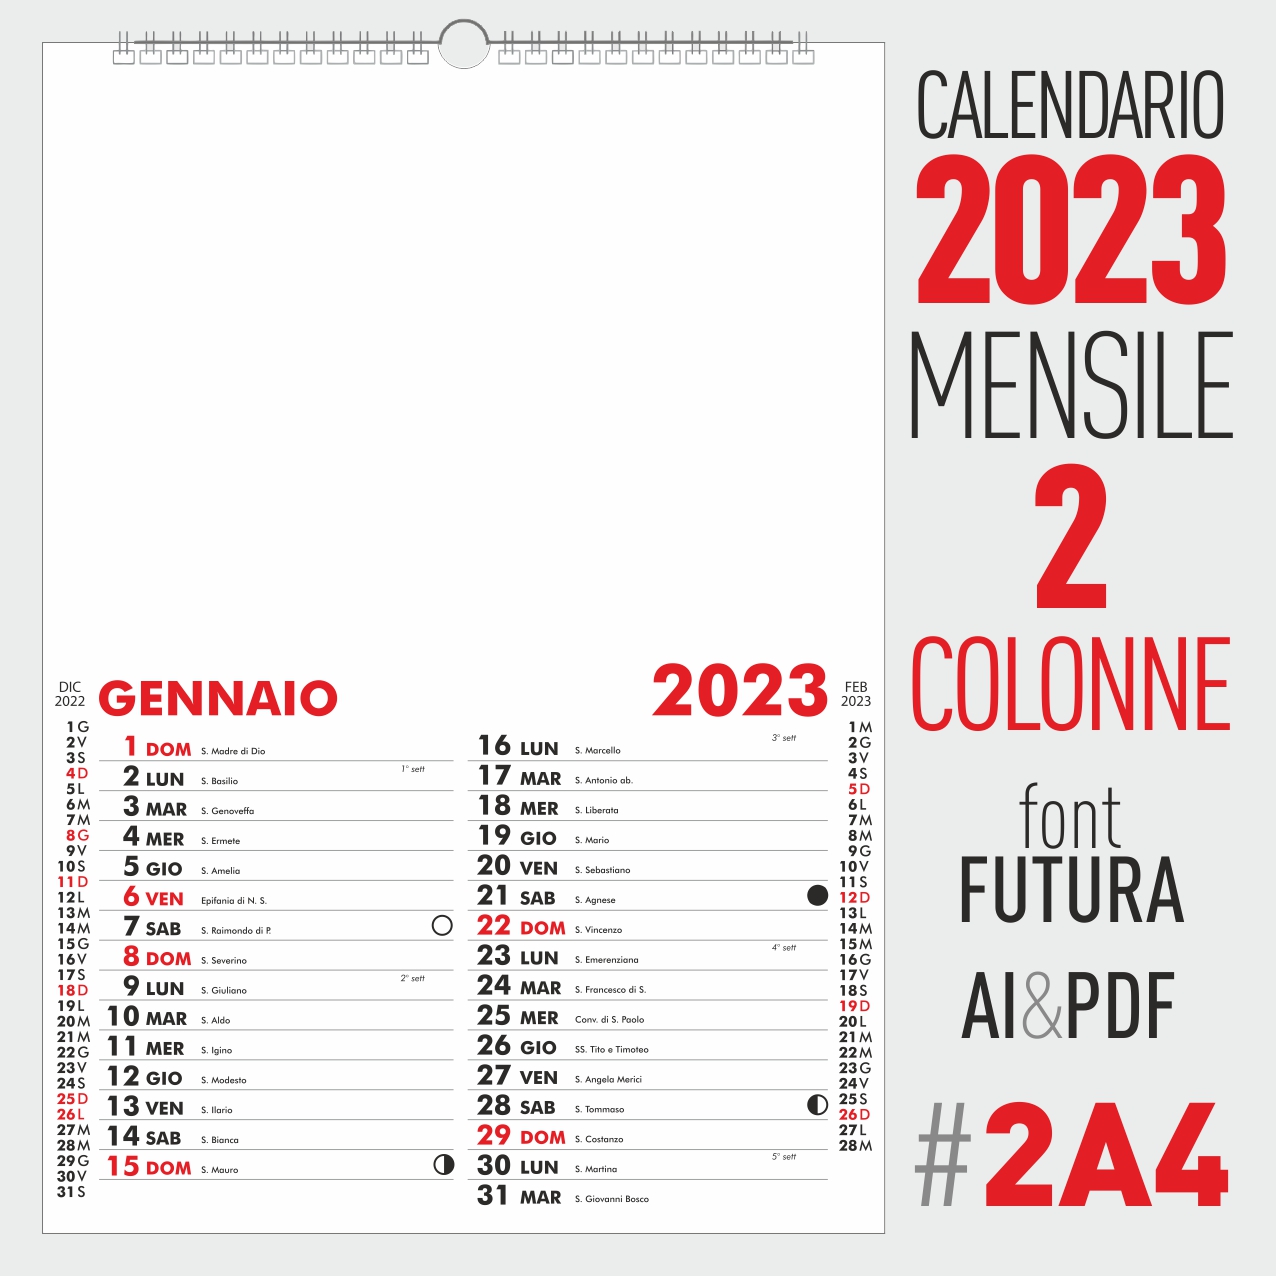 calendario 2023 mensile 2 colonne